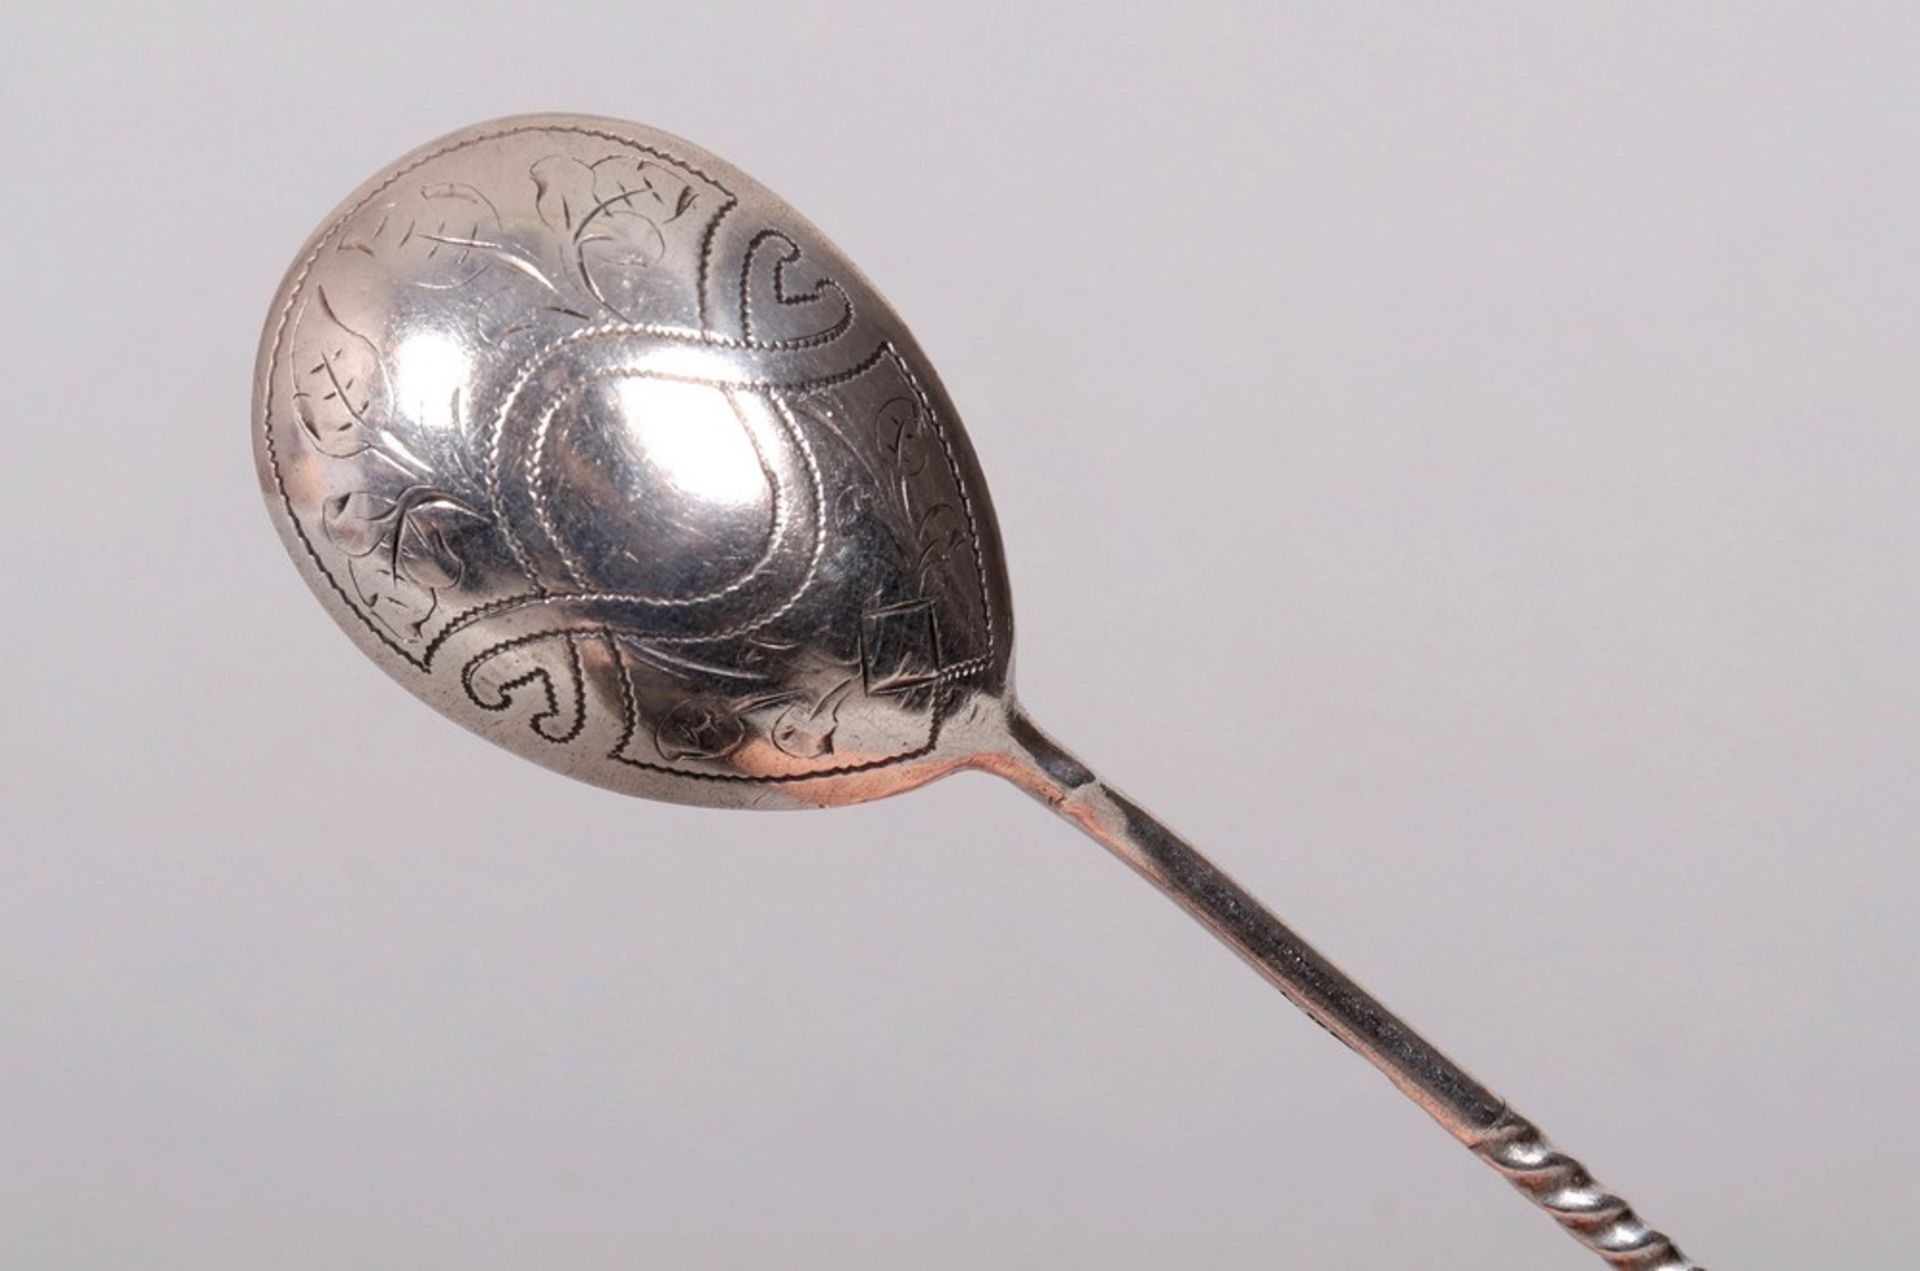 Small decorative spoon, silver, 84 zolotnik, Vasily Makhalov (1823-1867), Moscow, c. 1860 - Image 4 of 5